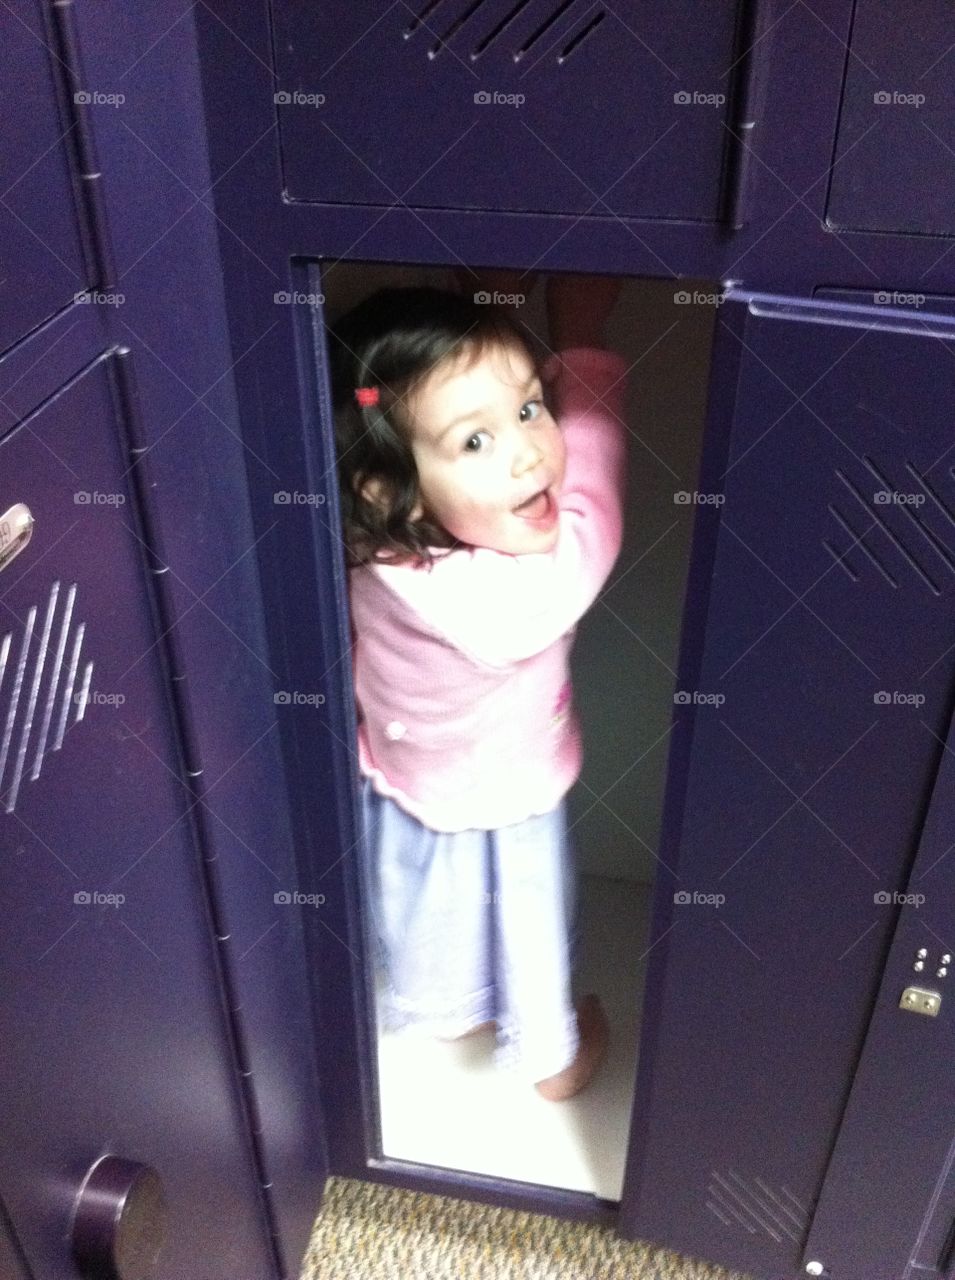 Girl in locker. Little girl inside locker